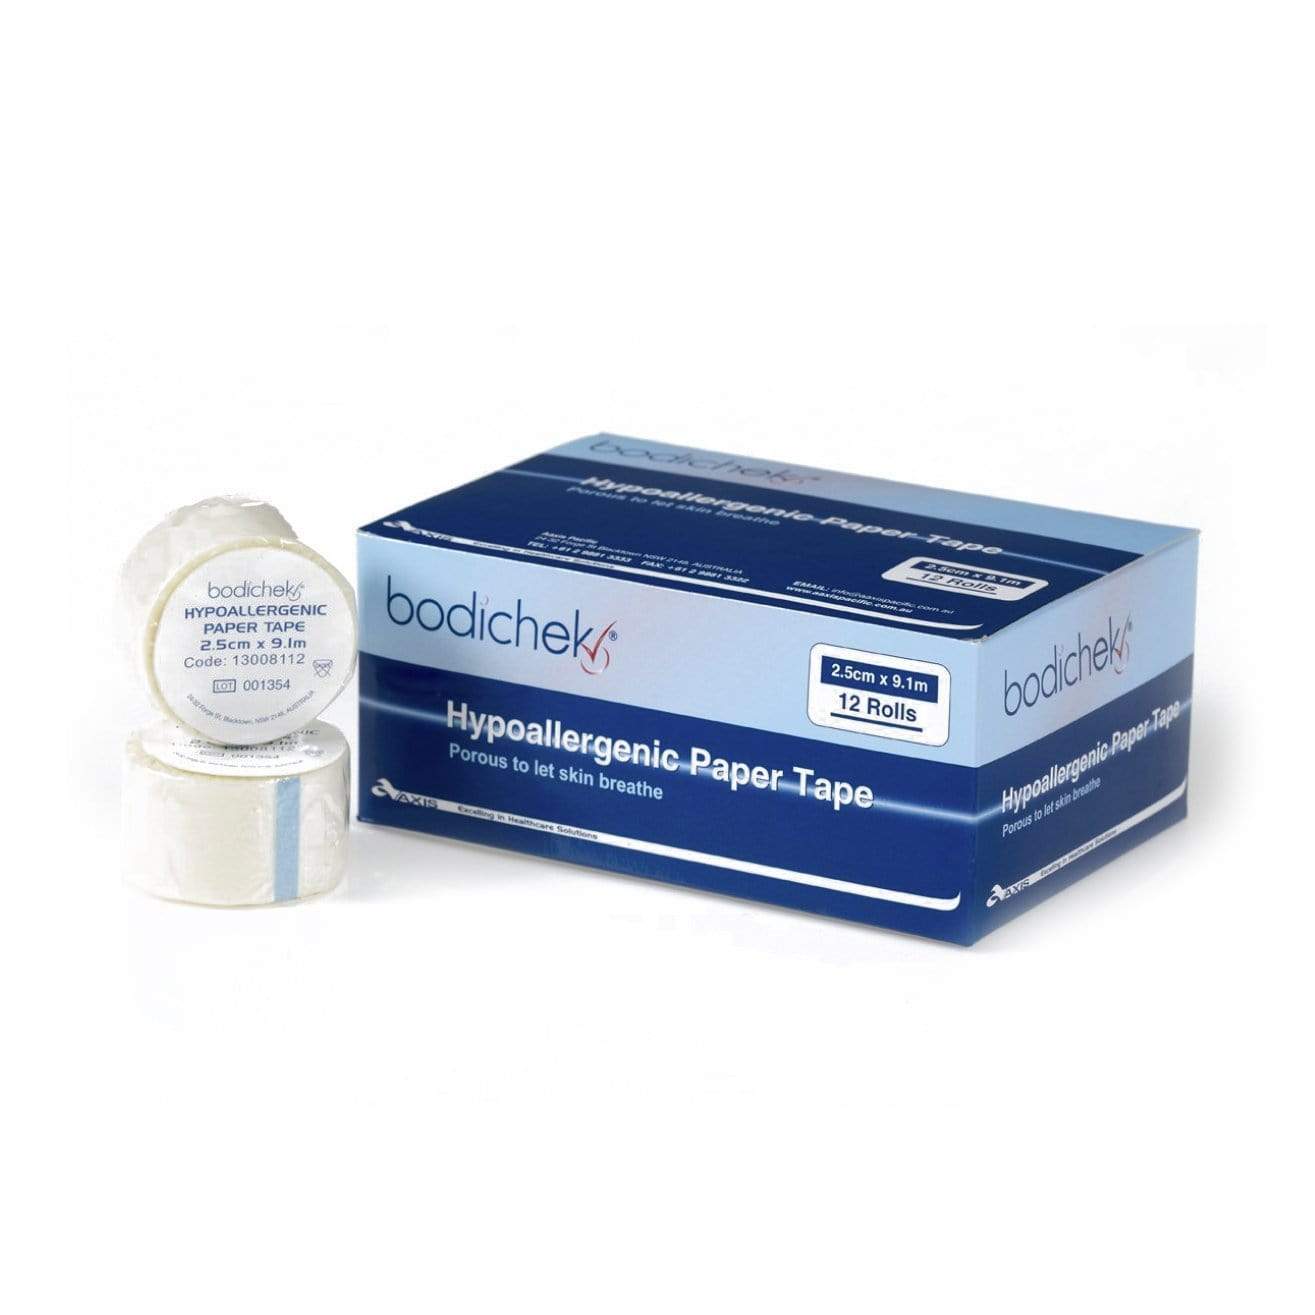 Bodichek Hypoallergenic Paper Tape